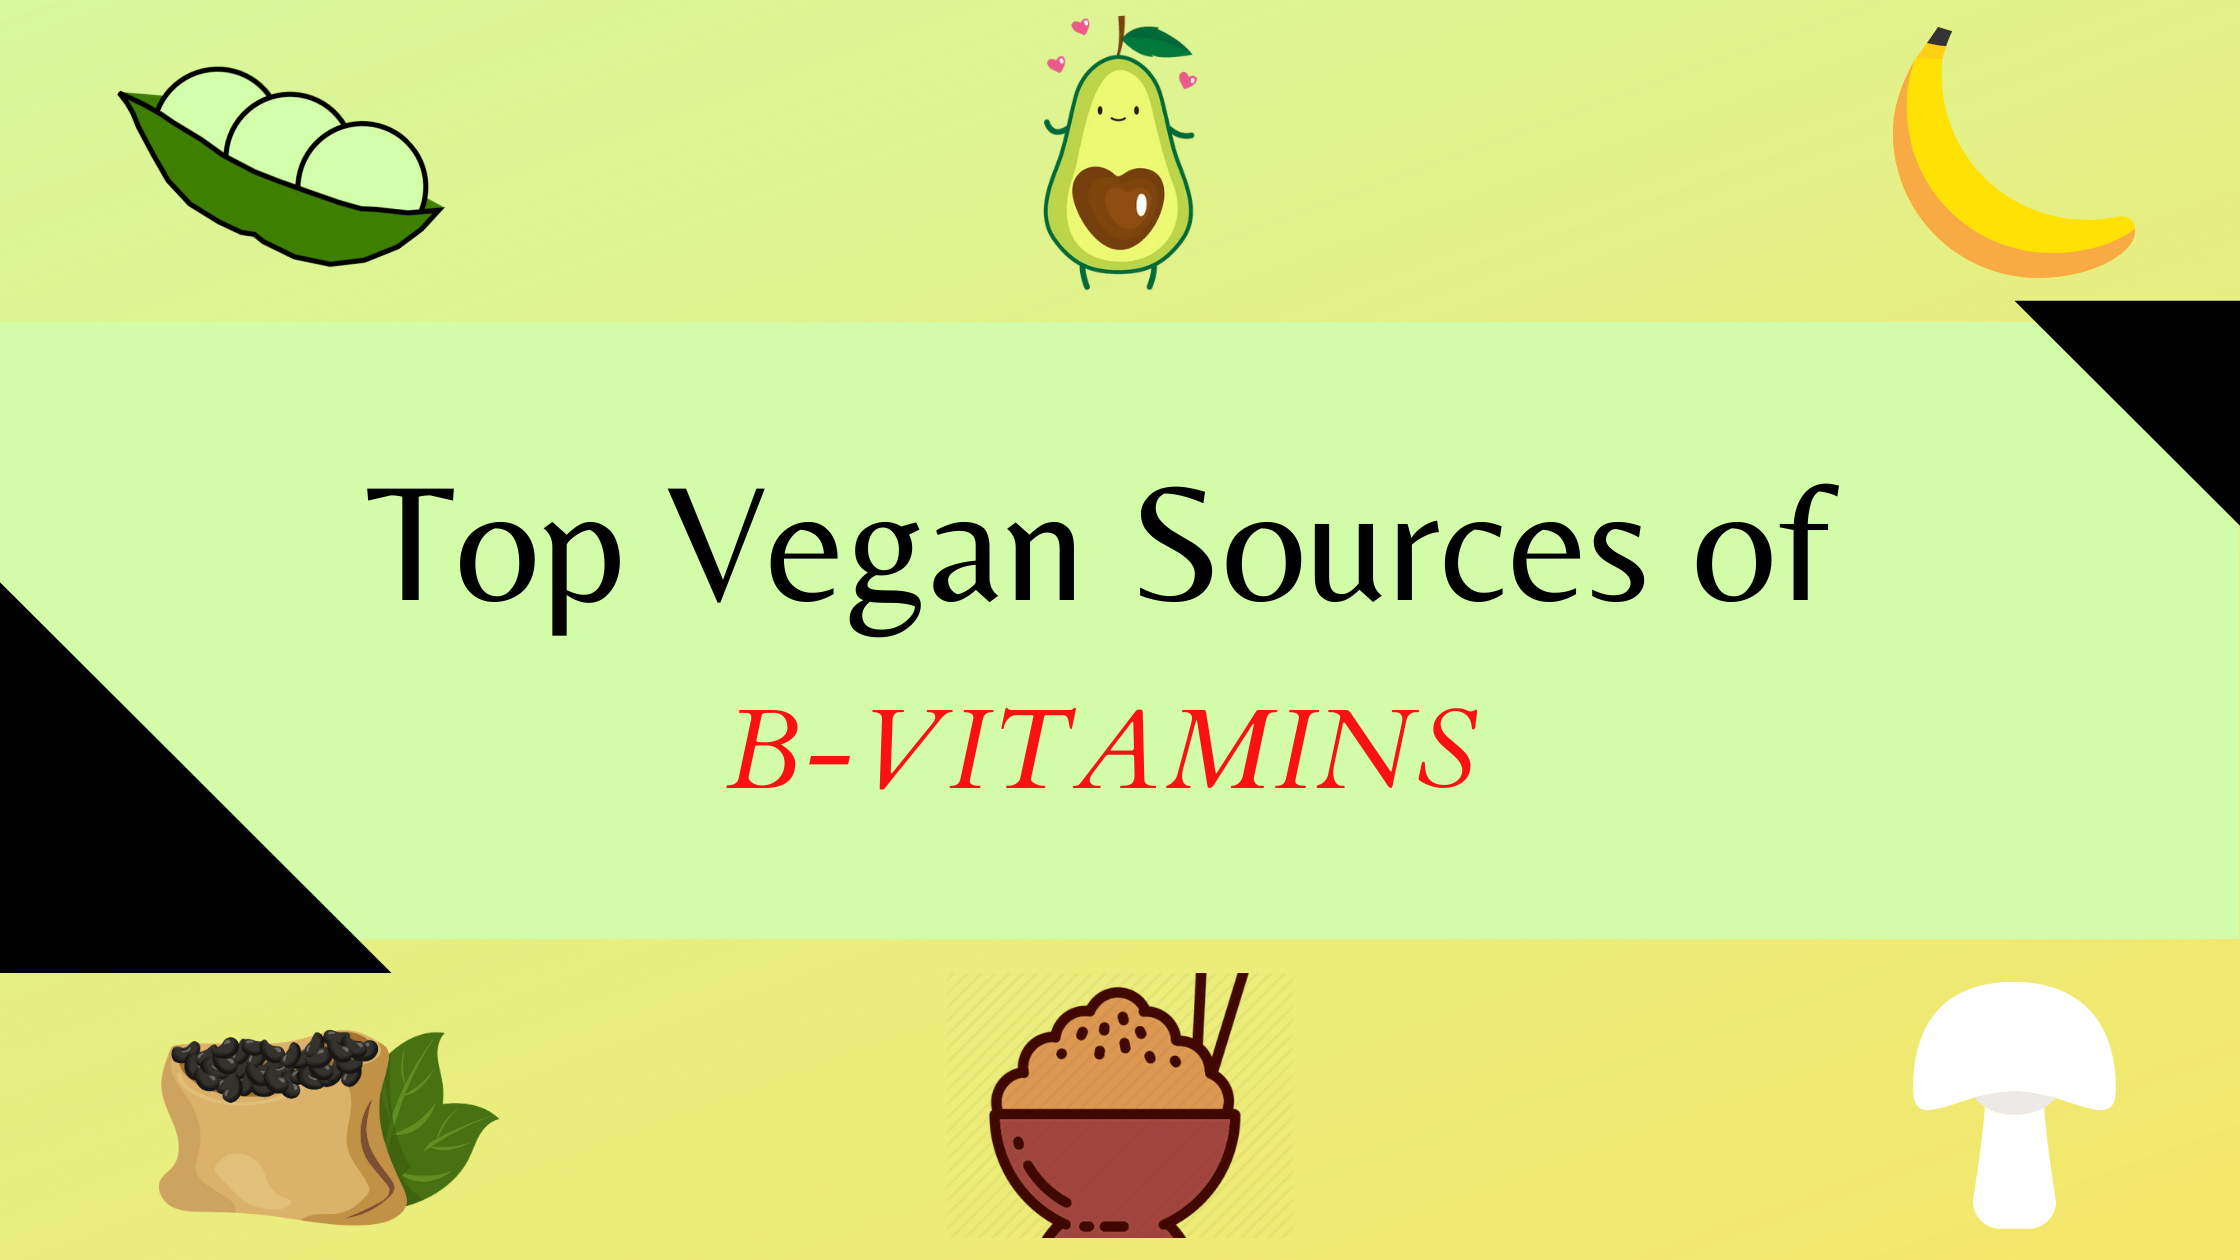 B-vitamin rich vegan foods